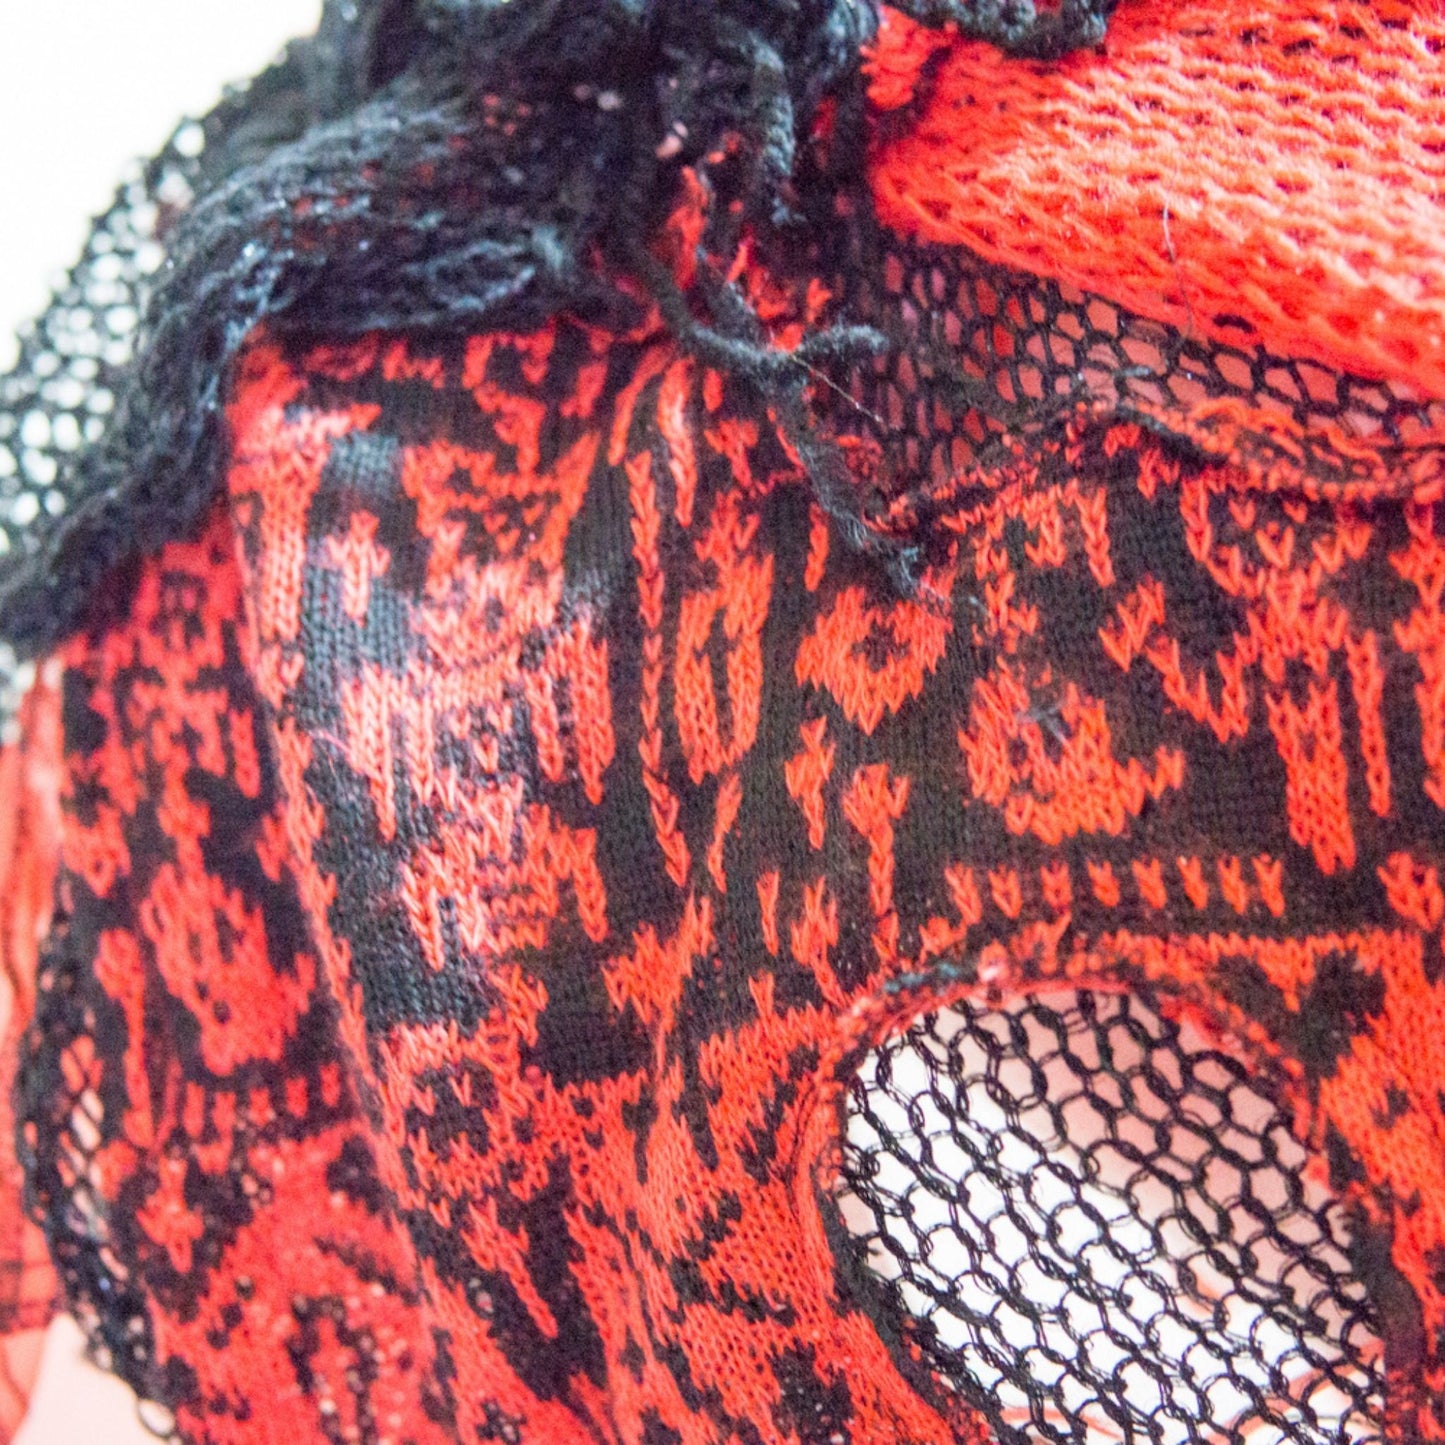 Blablahospital Original Punk Knit Desgin Red  See-through Pullover Collar/Cape